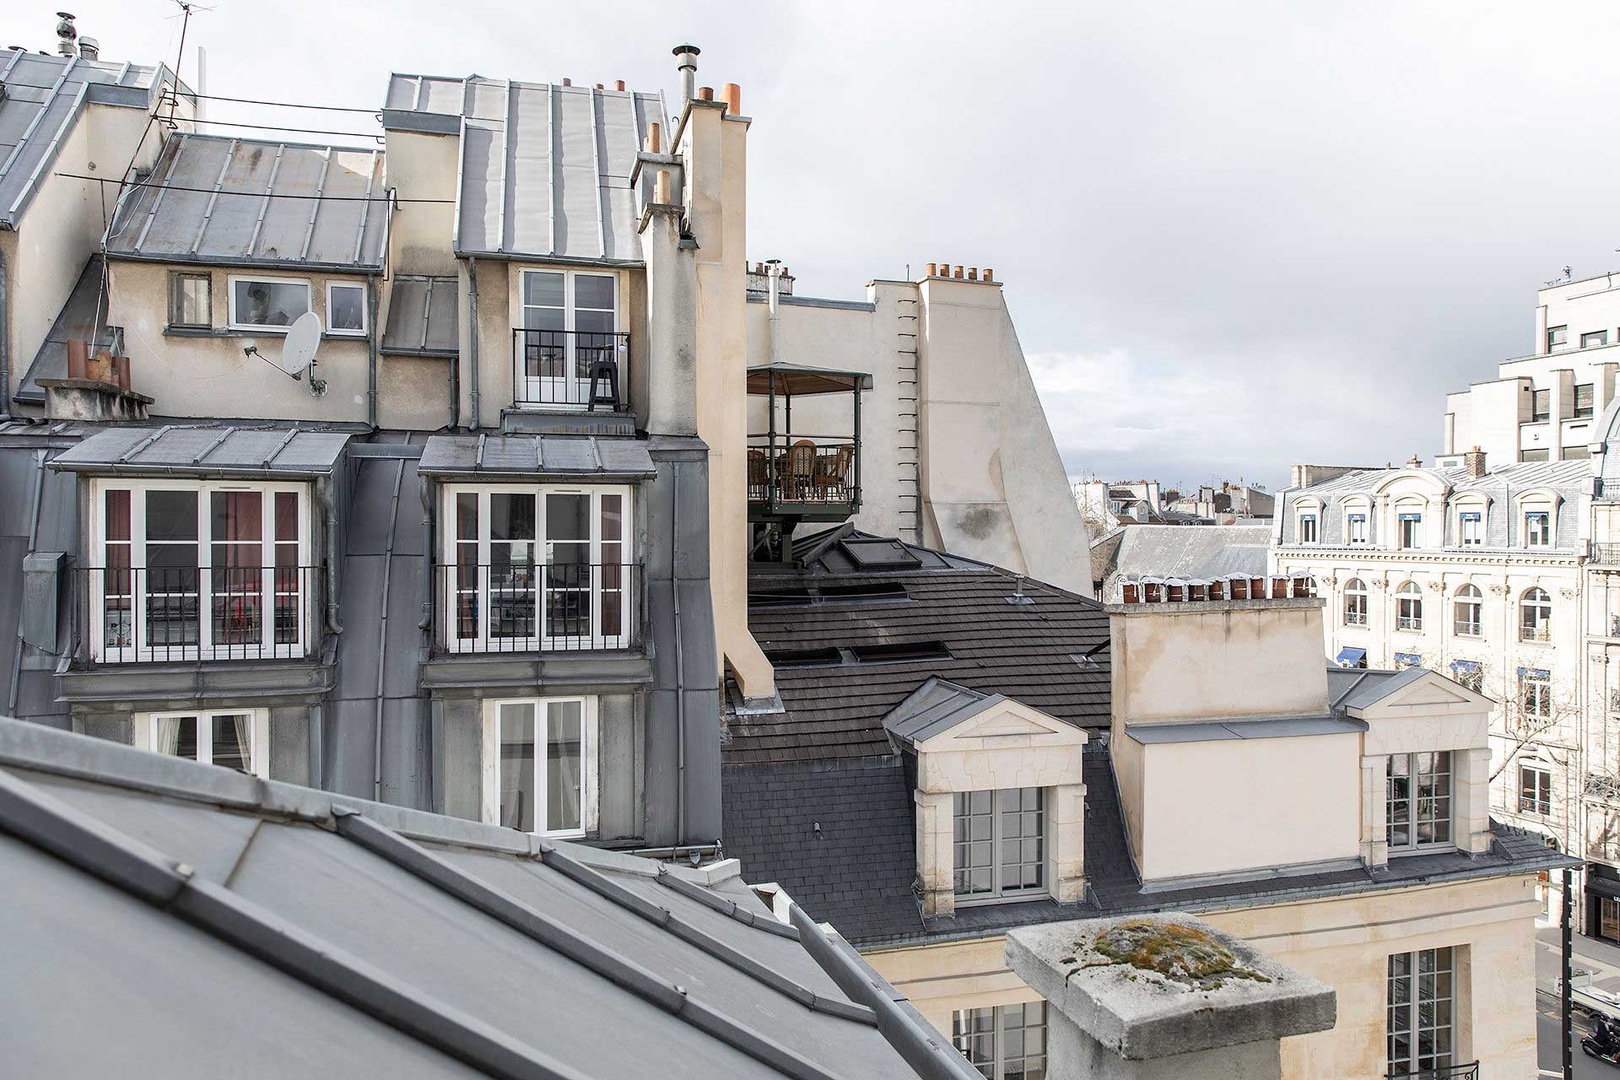 Classic rooftop views over Paris.